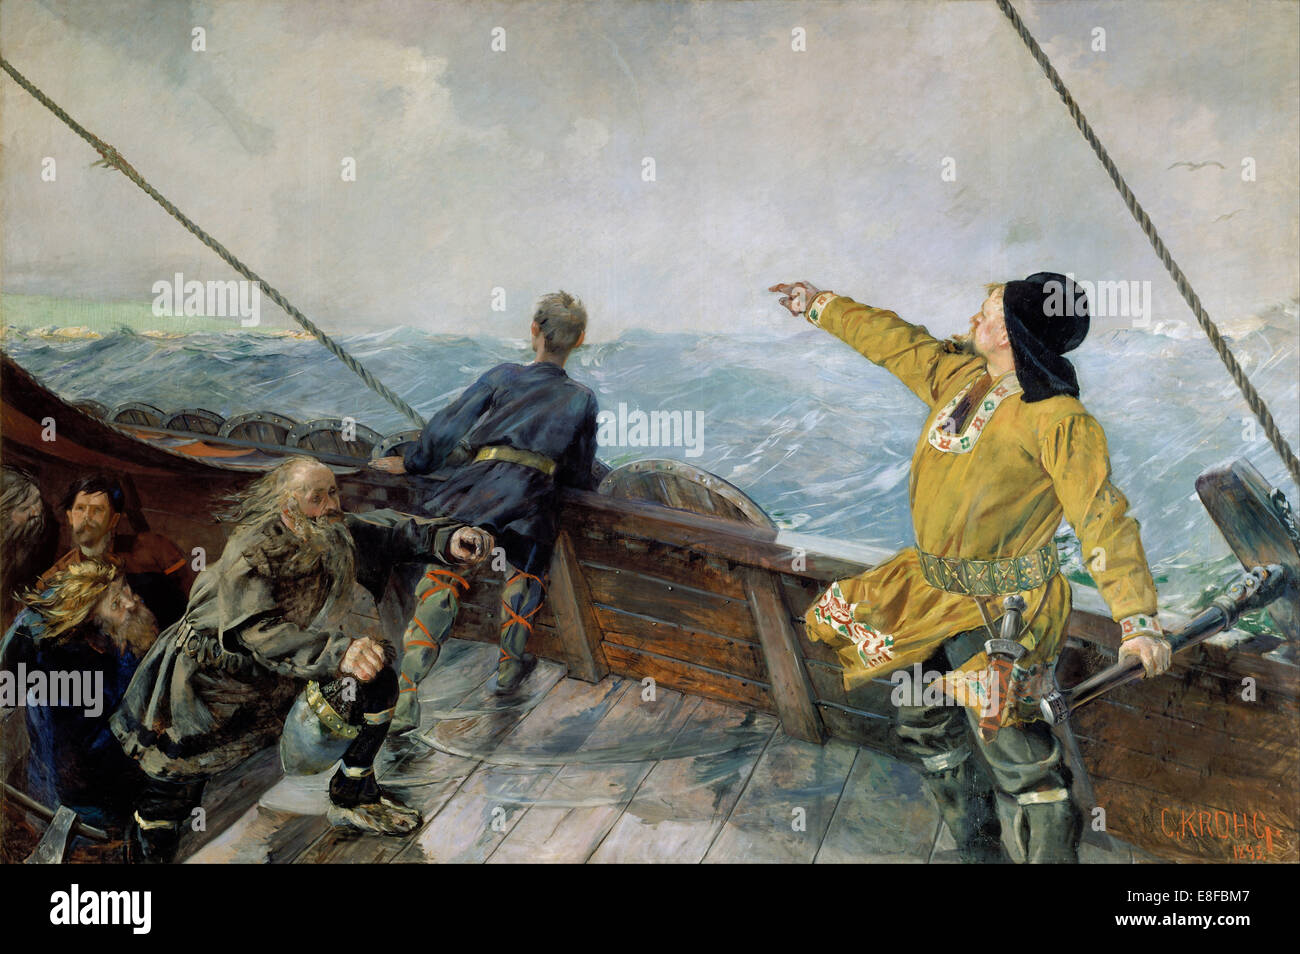 Leiv Eiriksson discovers America. Artist: Krohg, Christian (1852-1925) Stock Photo